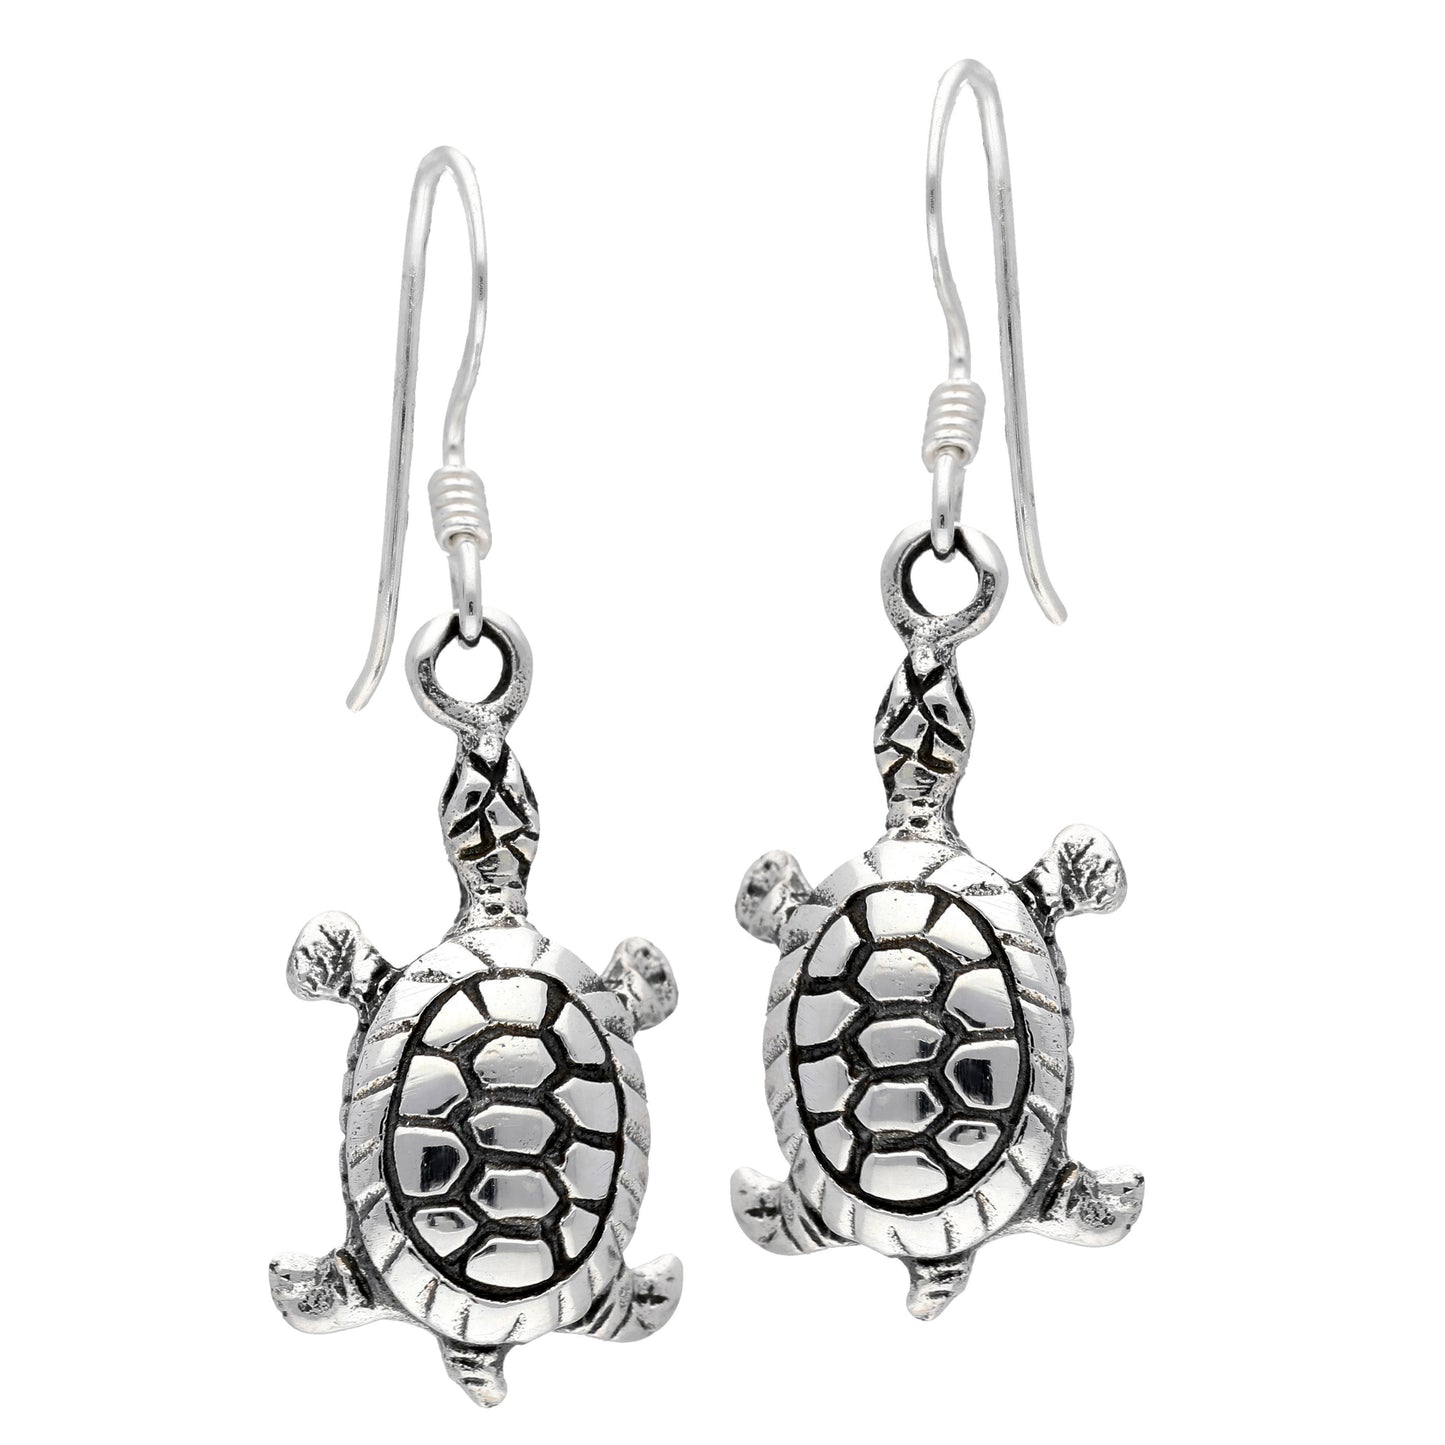 New Sterling Silver Turtle or Tortoise Hook Earrings - Silver Insanity